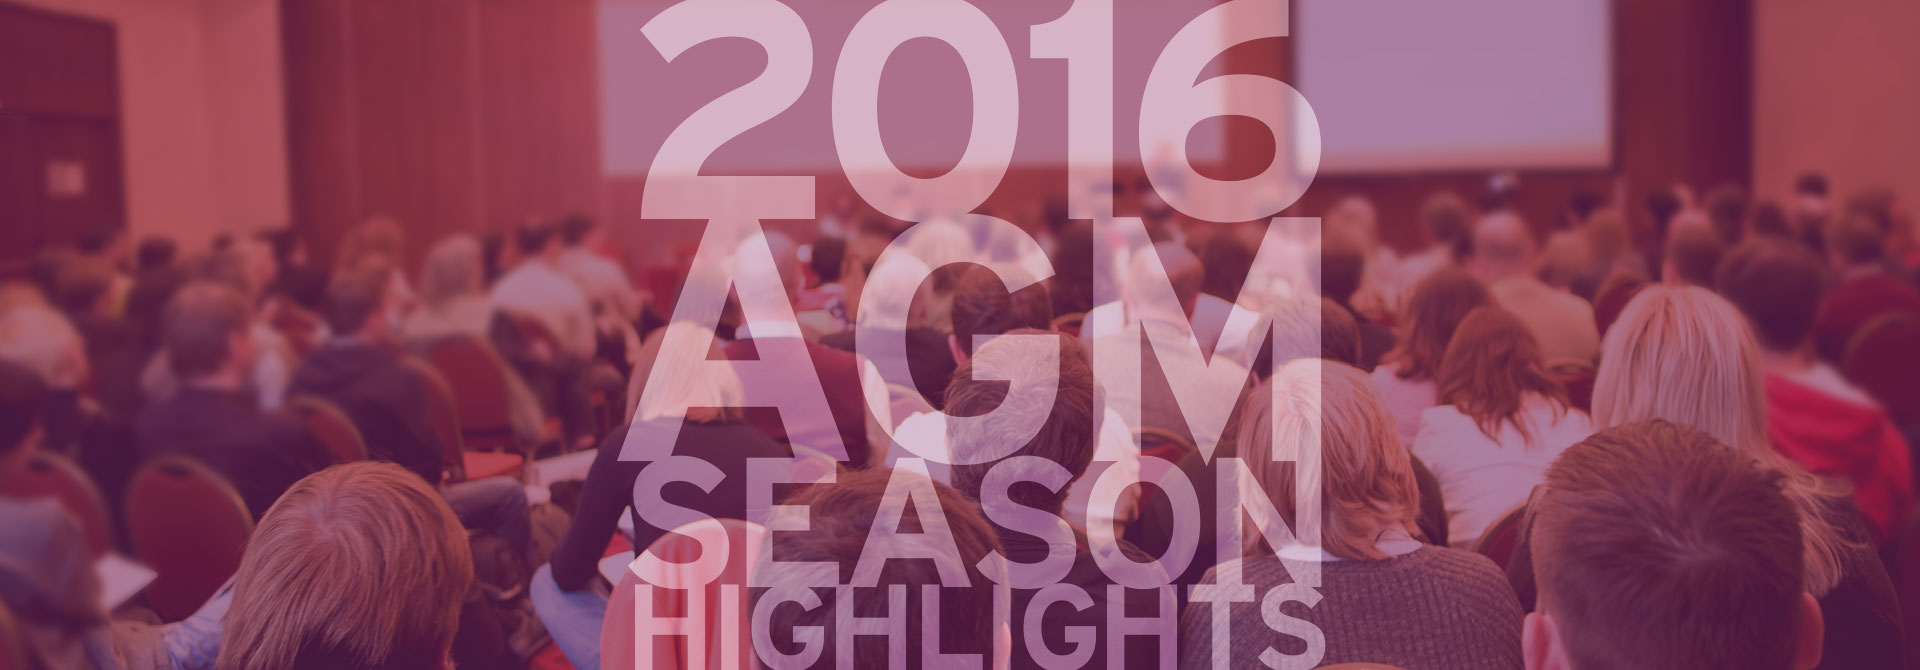 2016 AGM Season Highlights